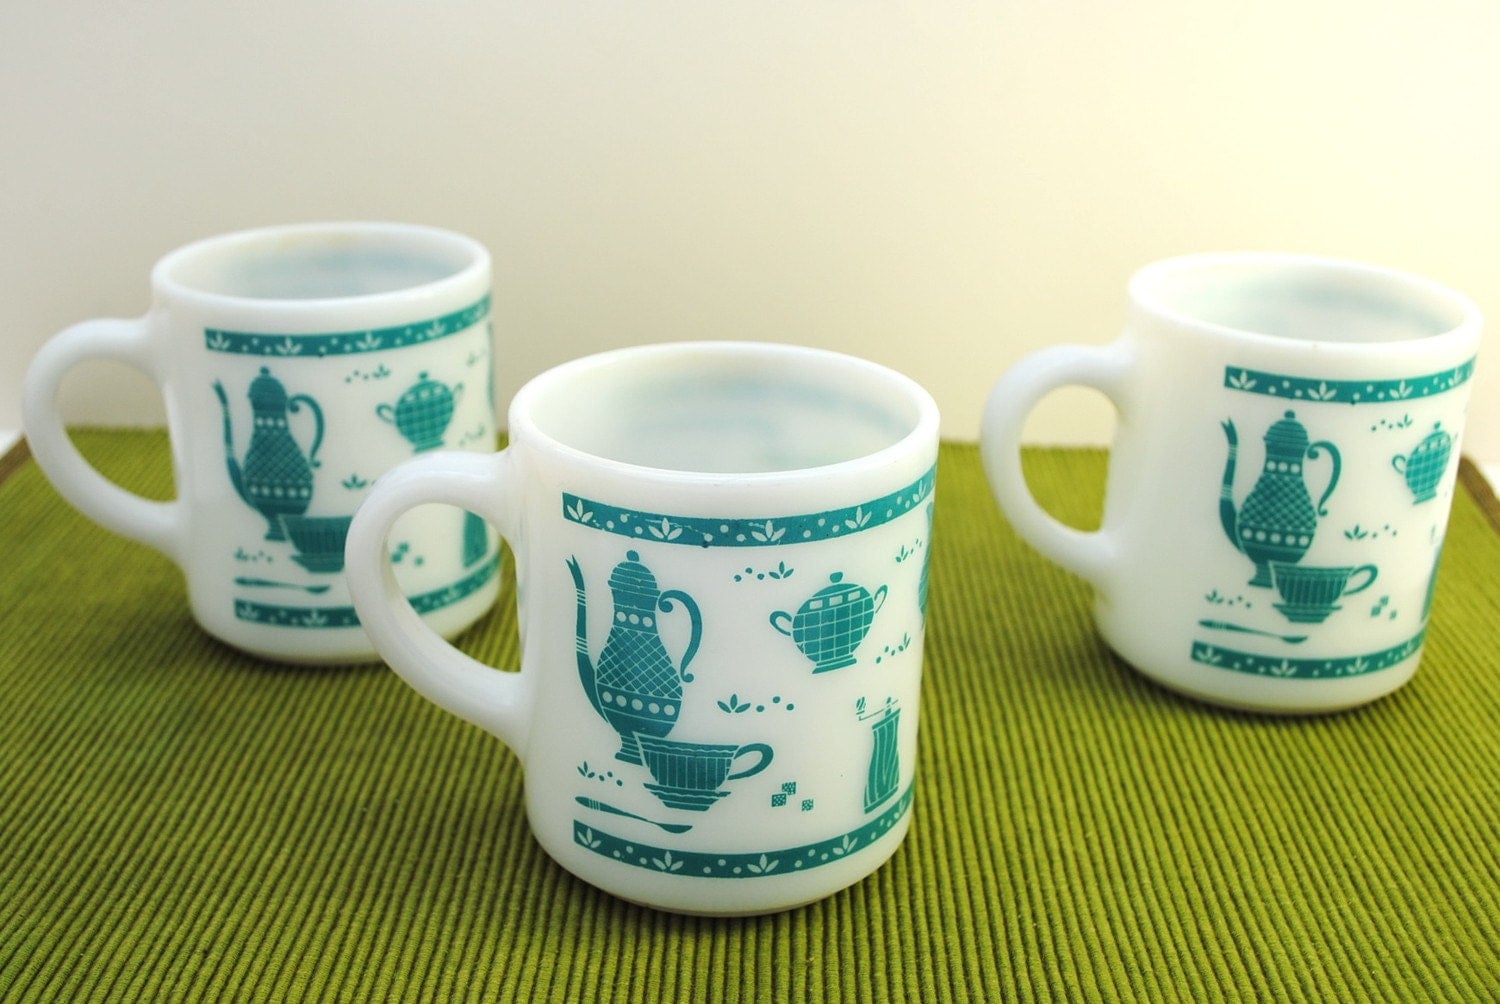  Vintage  1950s coffee mugs  turquoise Kitchen Aids design retro